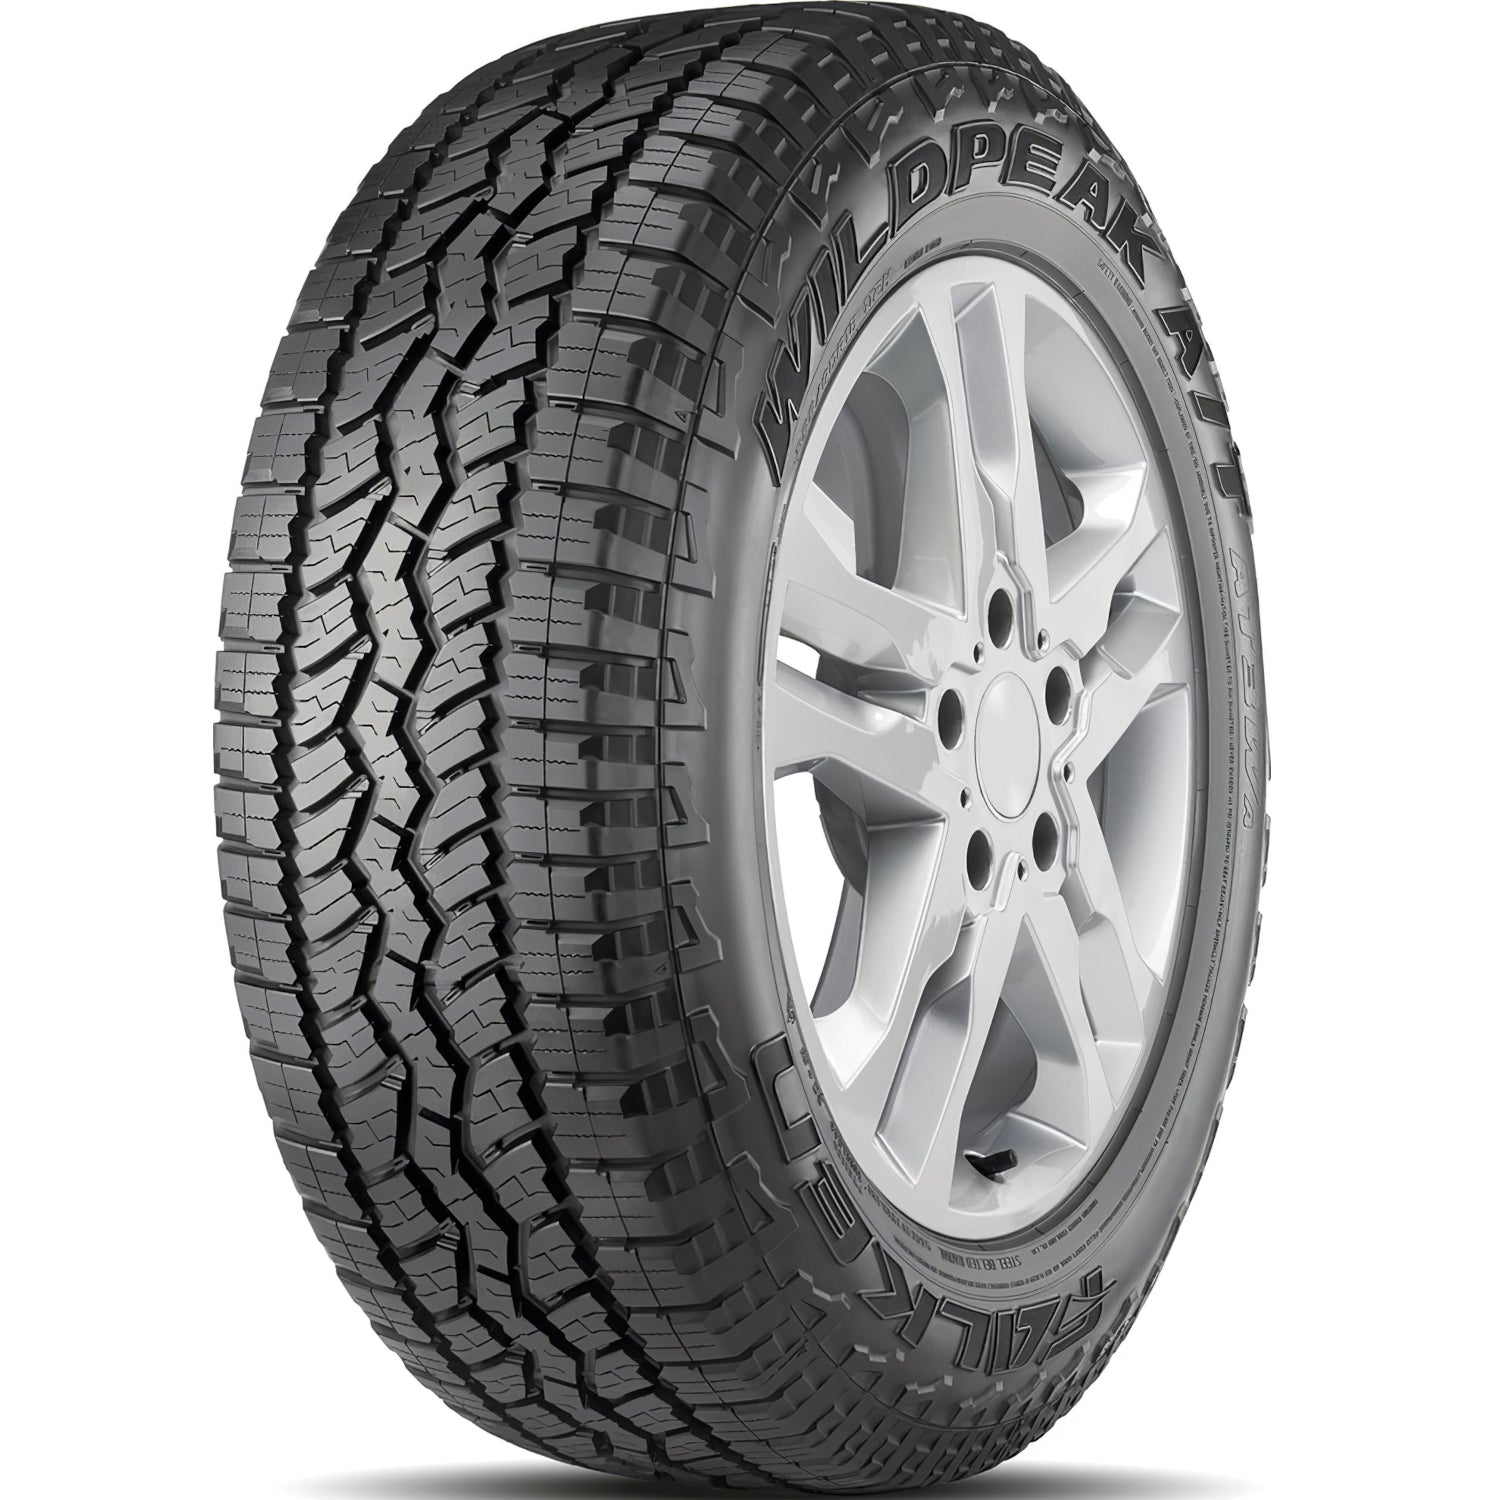 FALKEN WILDPEAK AT3WA 265/60R20 (32.5X10.4R 20) Tires